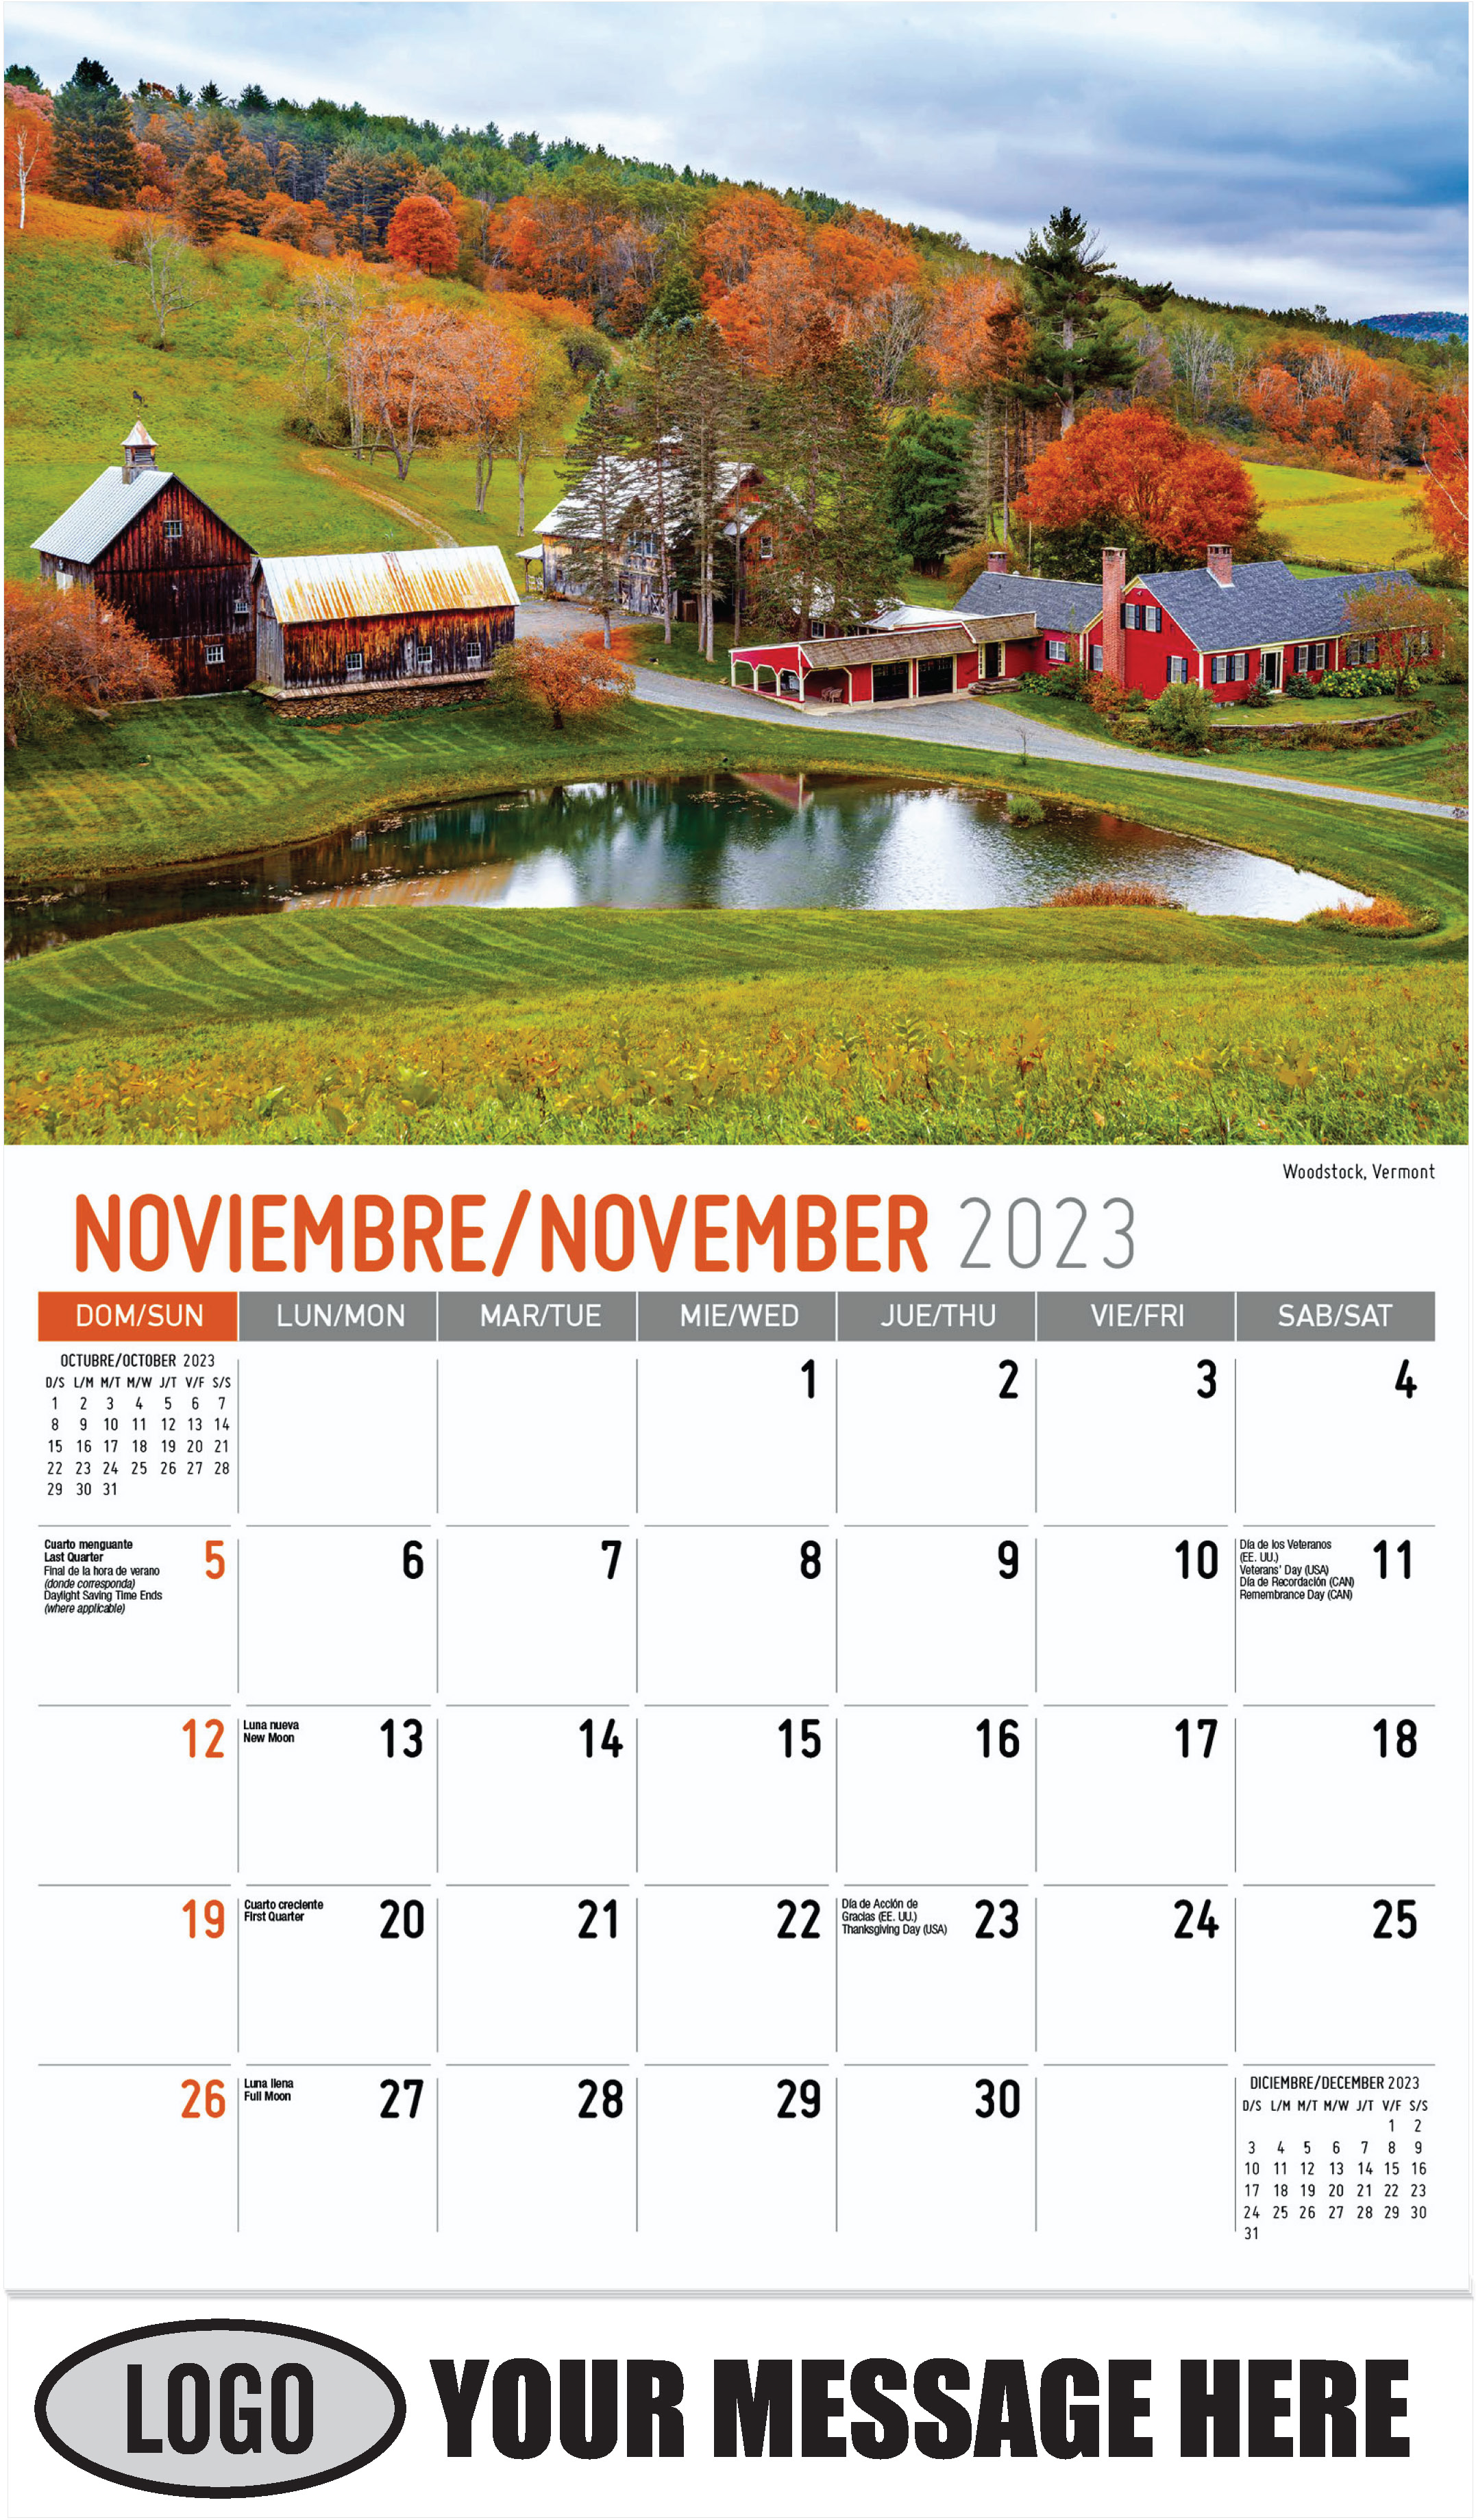 Woodstock, Vermont - November - Scenes of America (Spanish-English bilingual) 2023 Promotional Calendar